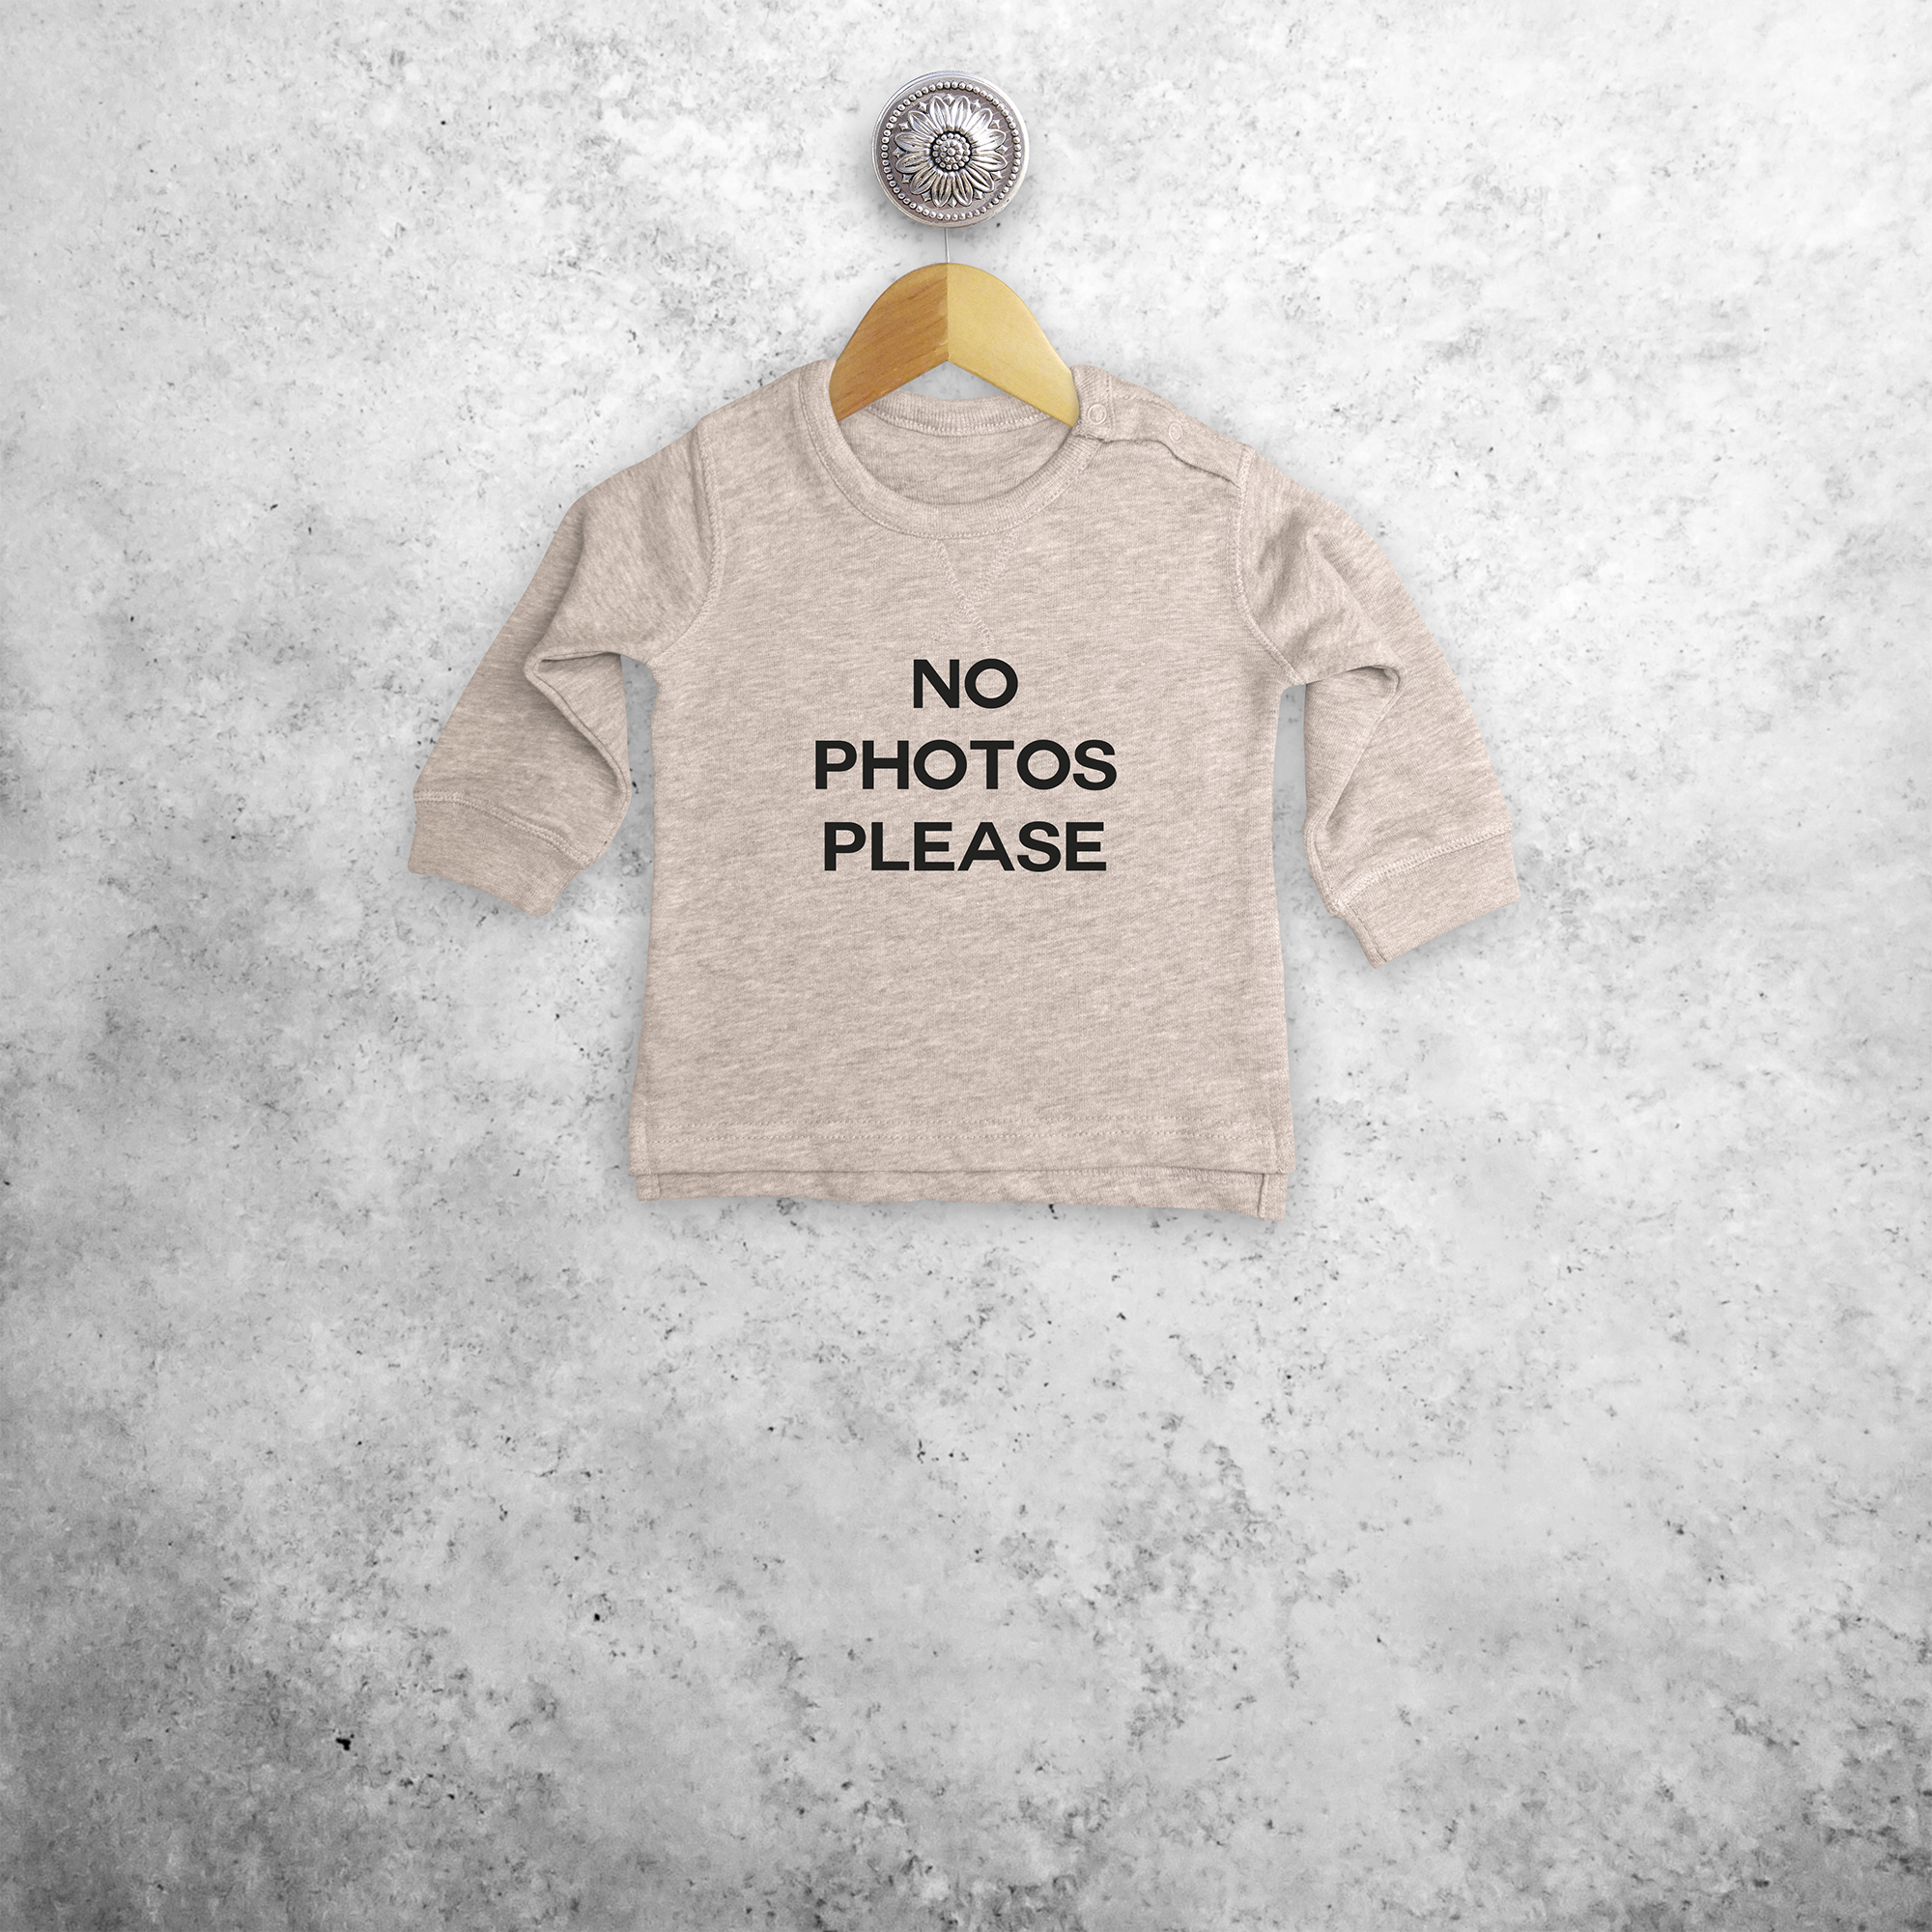 'No photos please' baby sweater